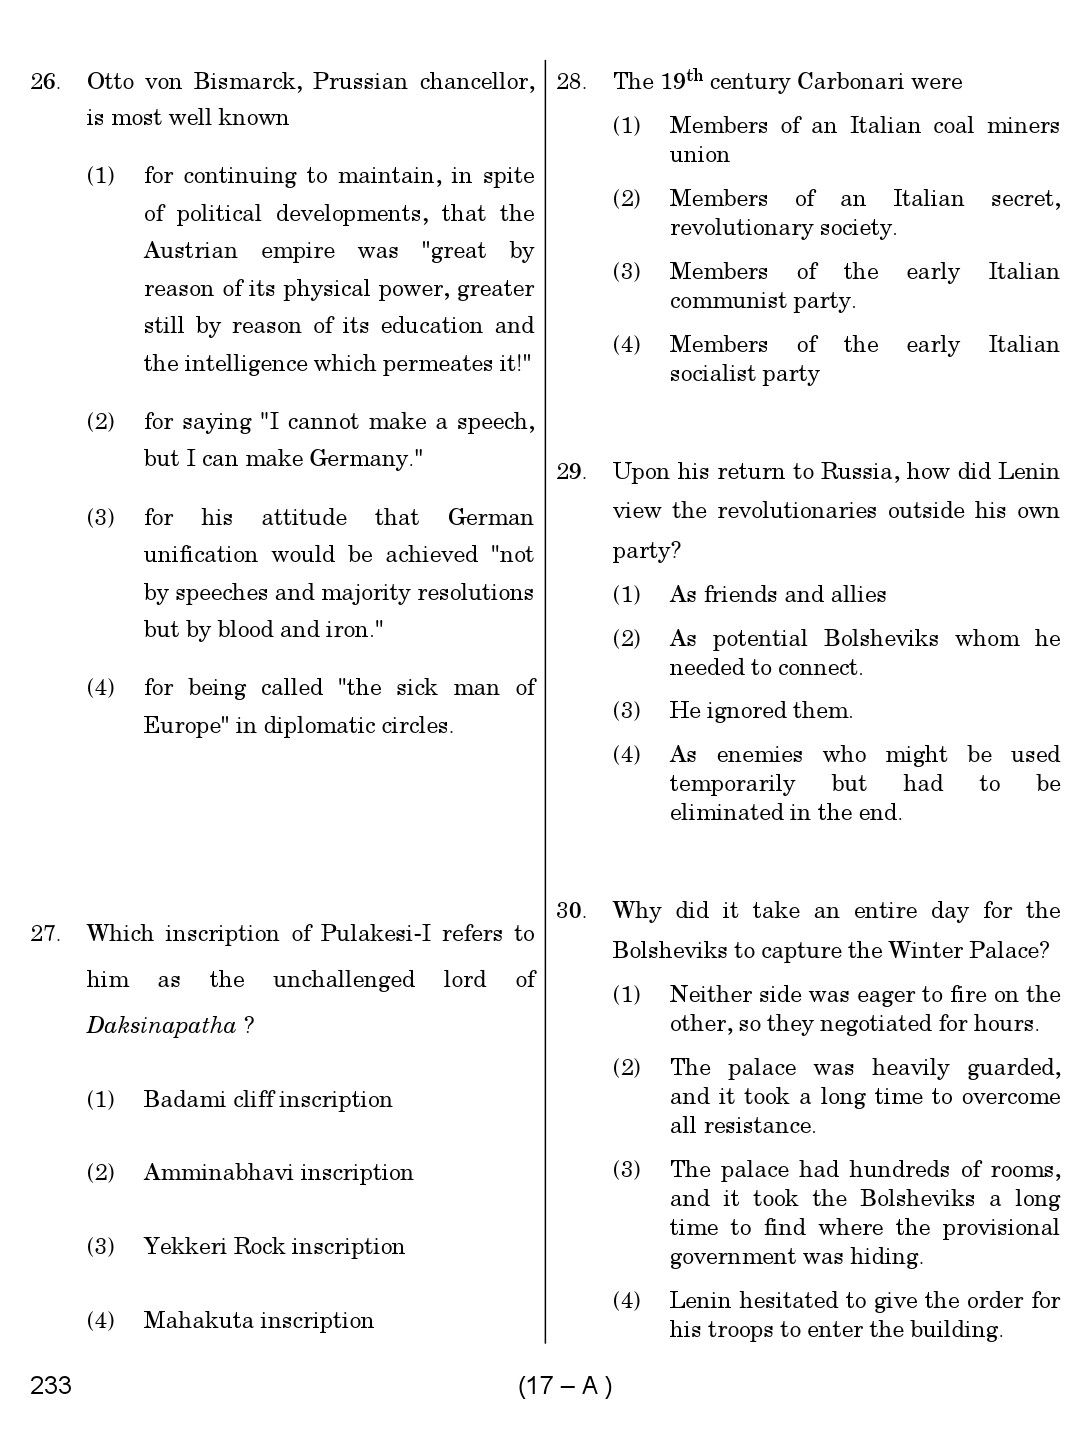 Karnataka PSC History Teacher Exam Sample Question Paper Subject code 233 17